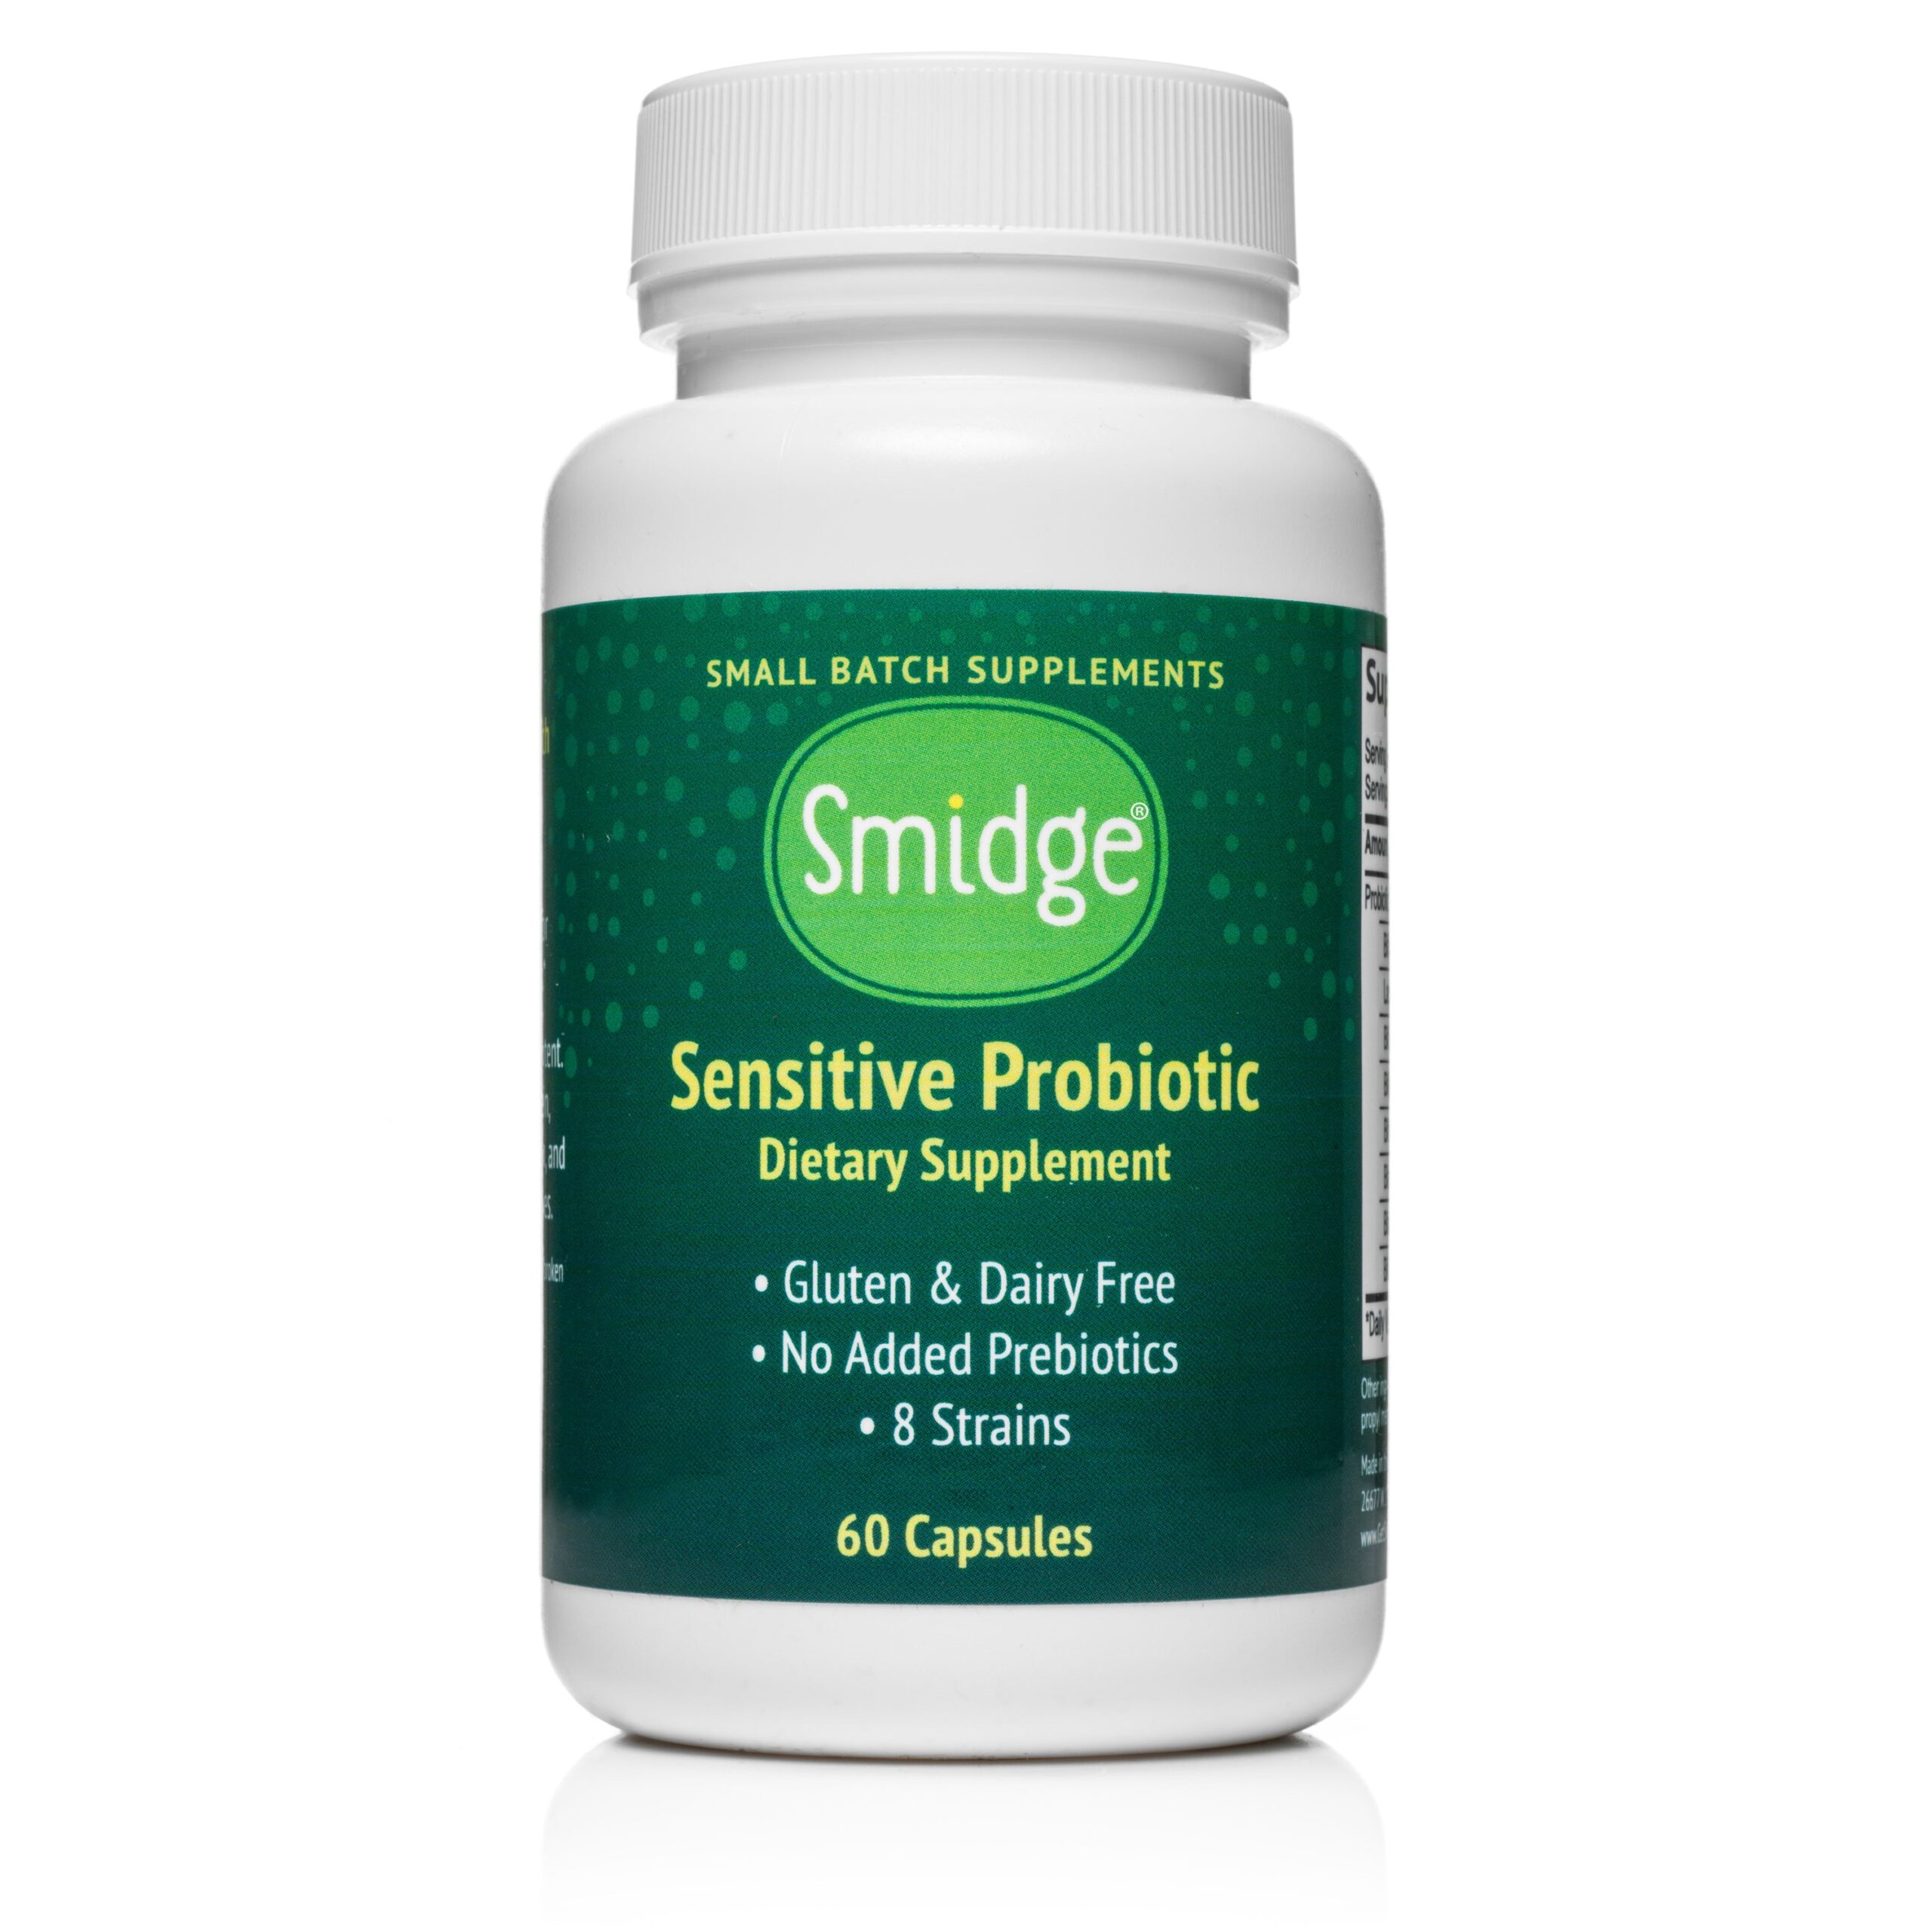 Smidge Sensitive Probiotic Reviews